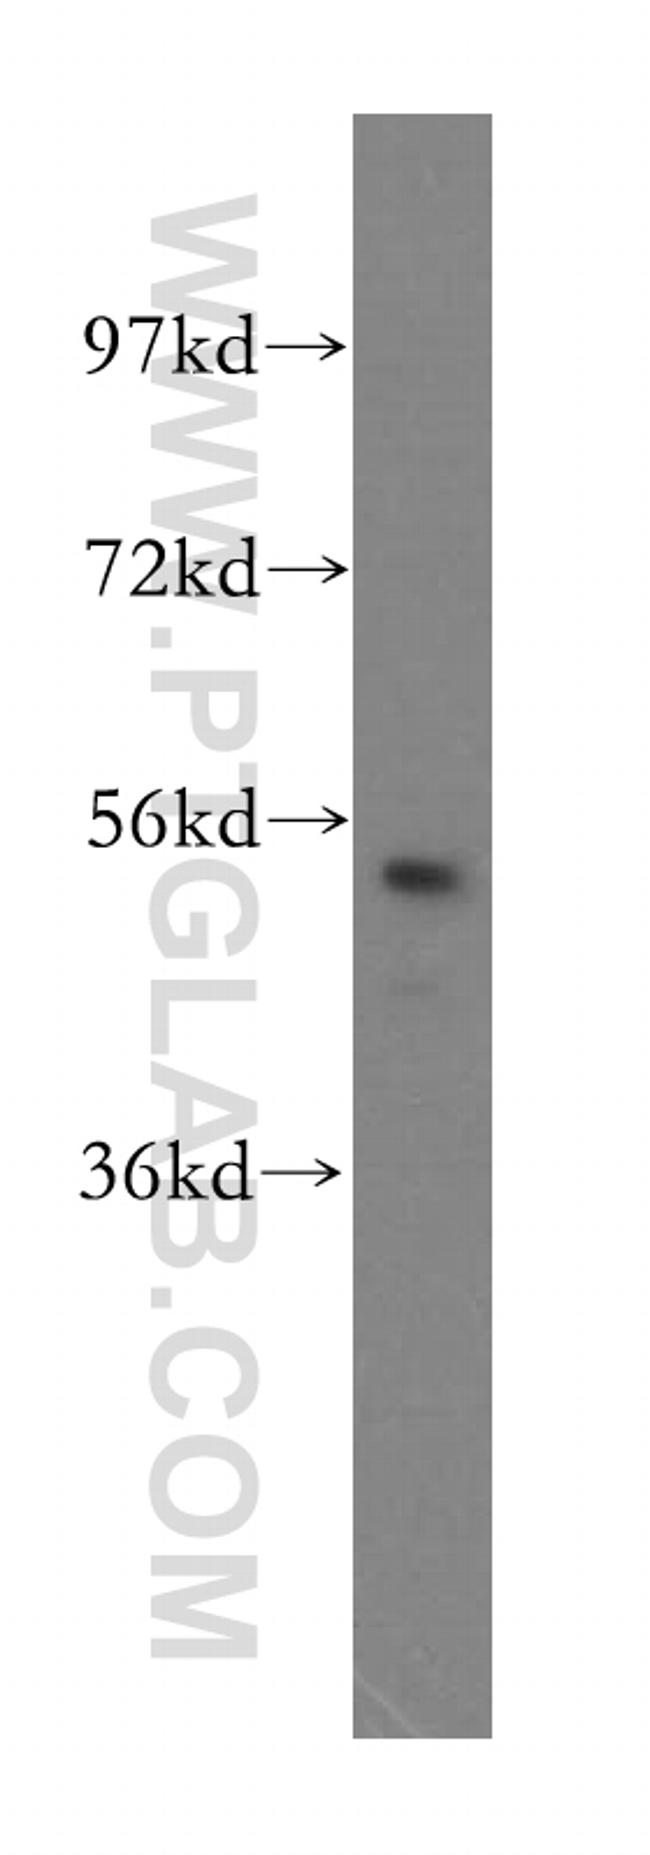 PMPCB Antibody in Western Blot (WB)